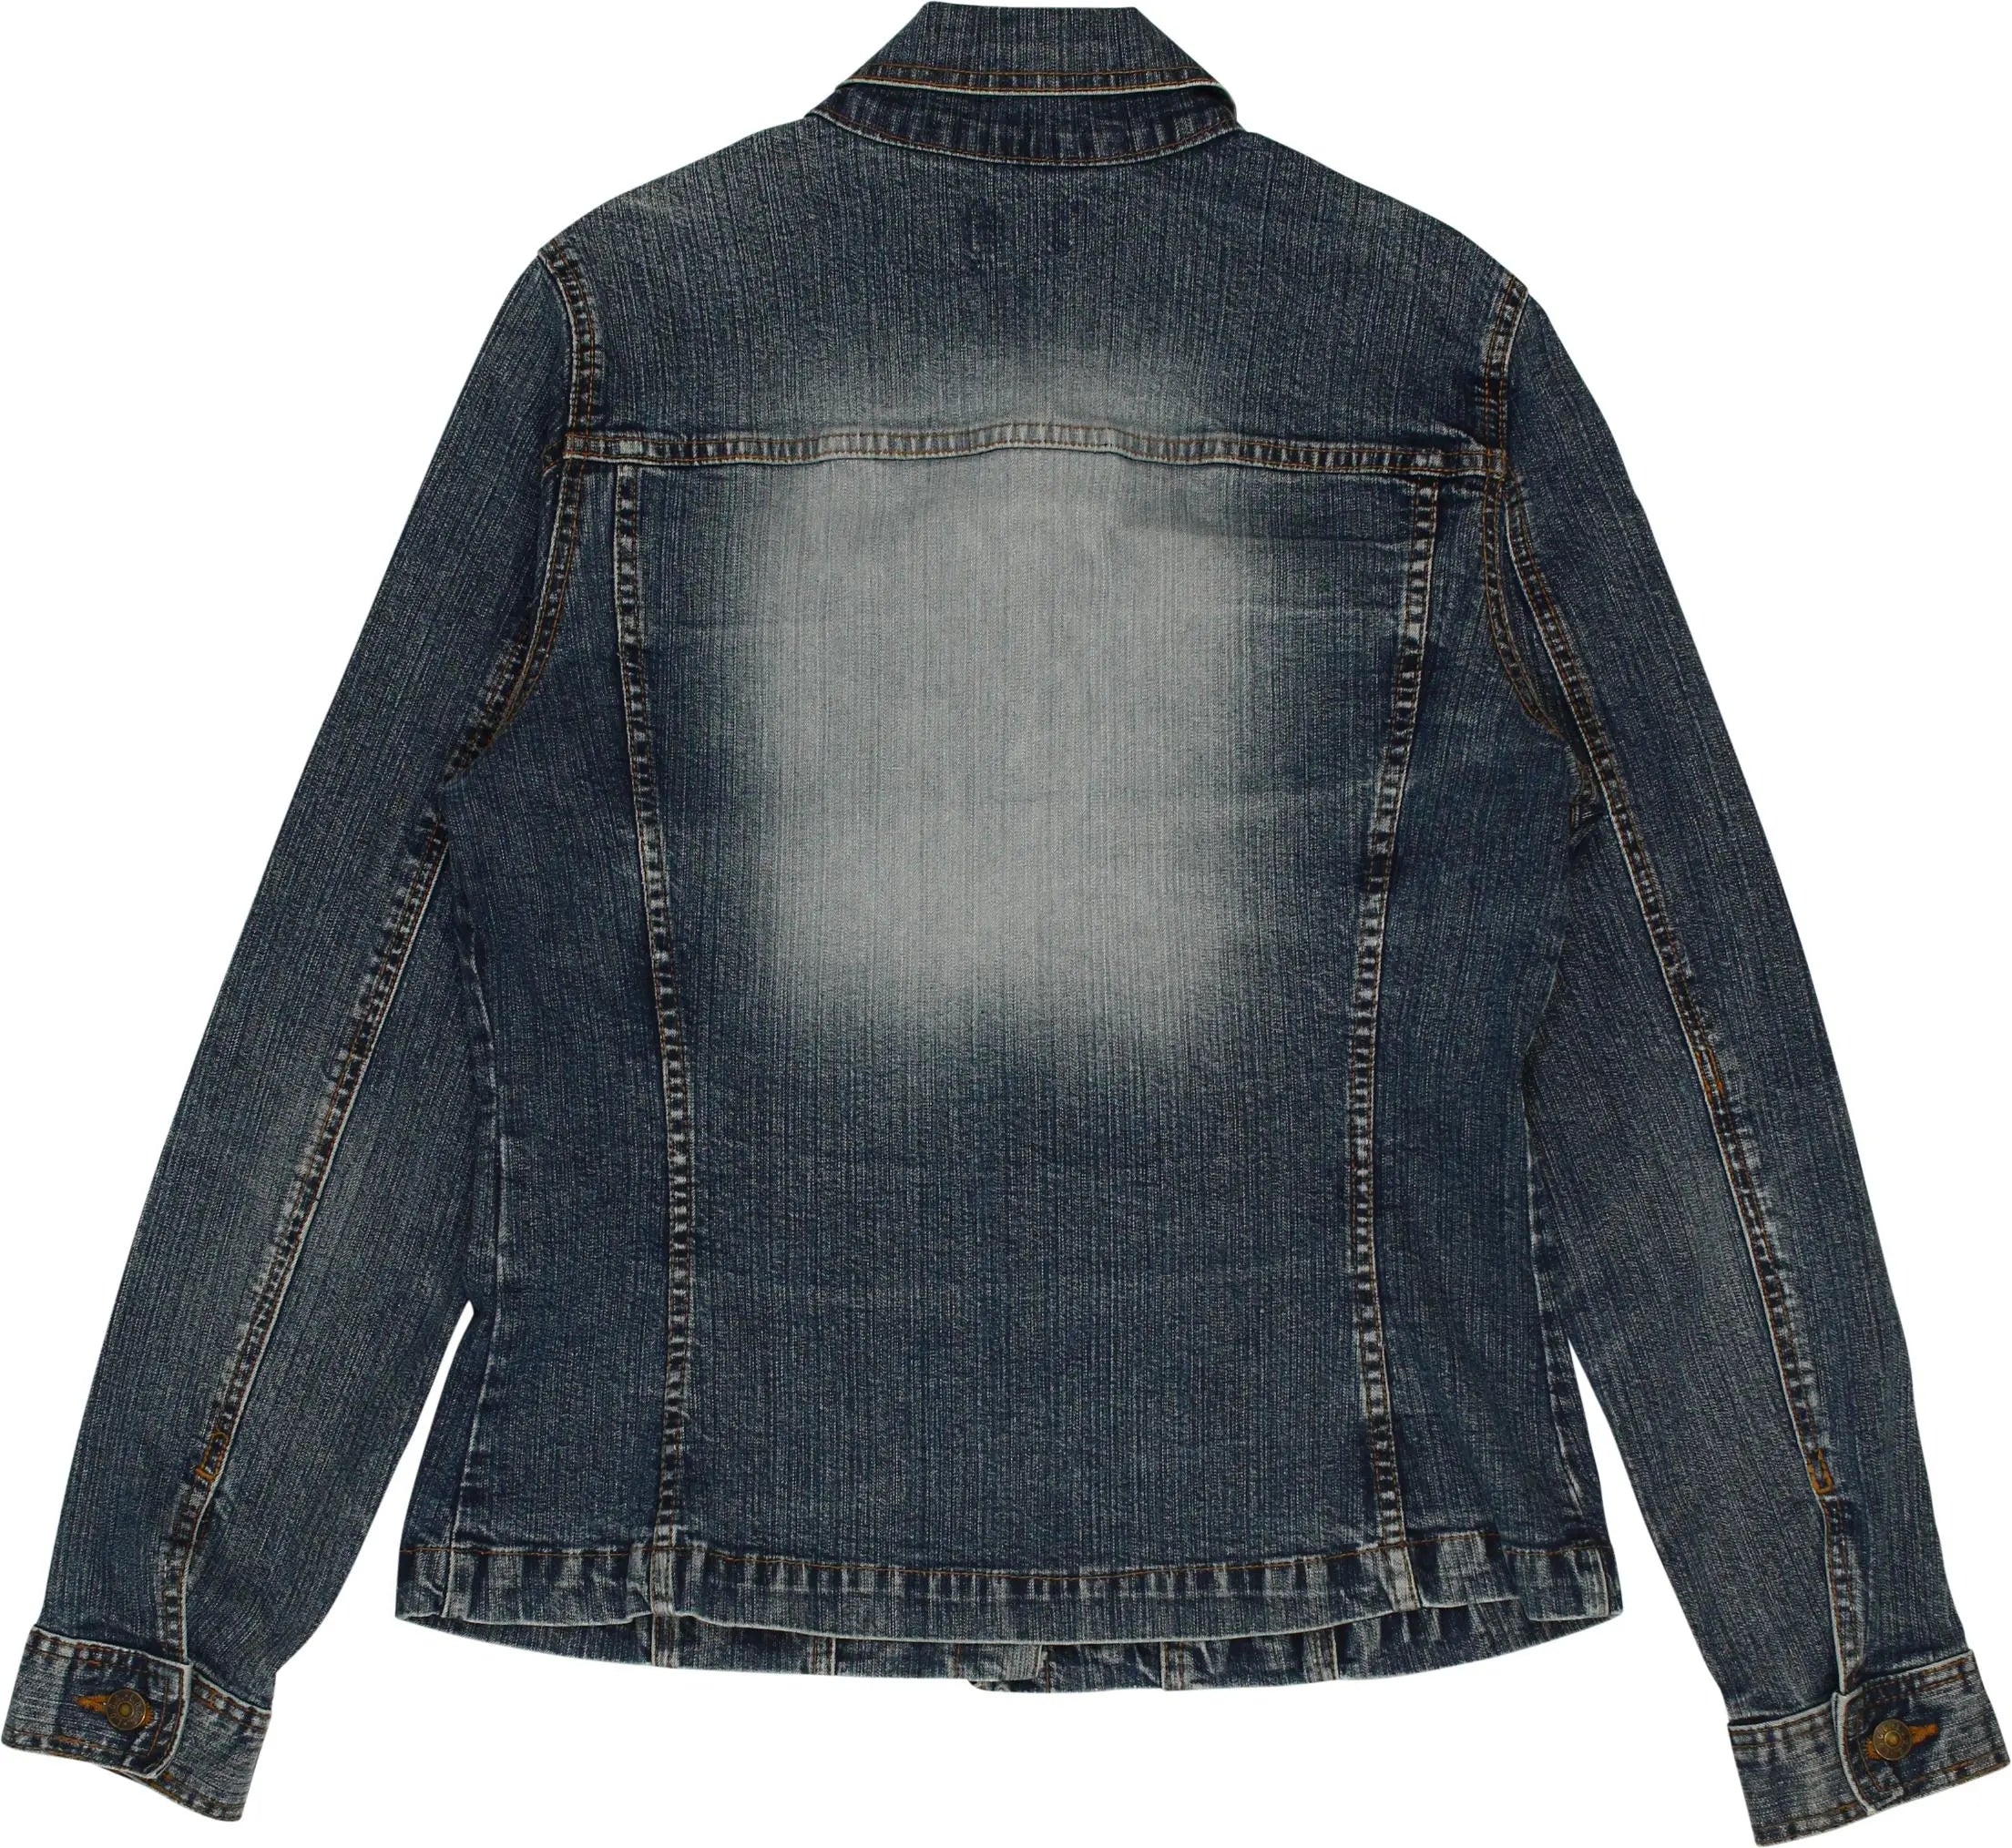 H&M - Denim Jacket- ThriftTale.com - Vintage and second handclothing